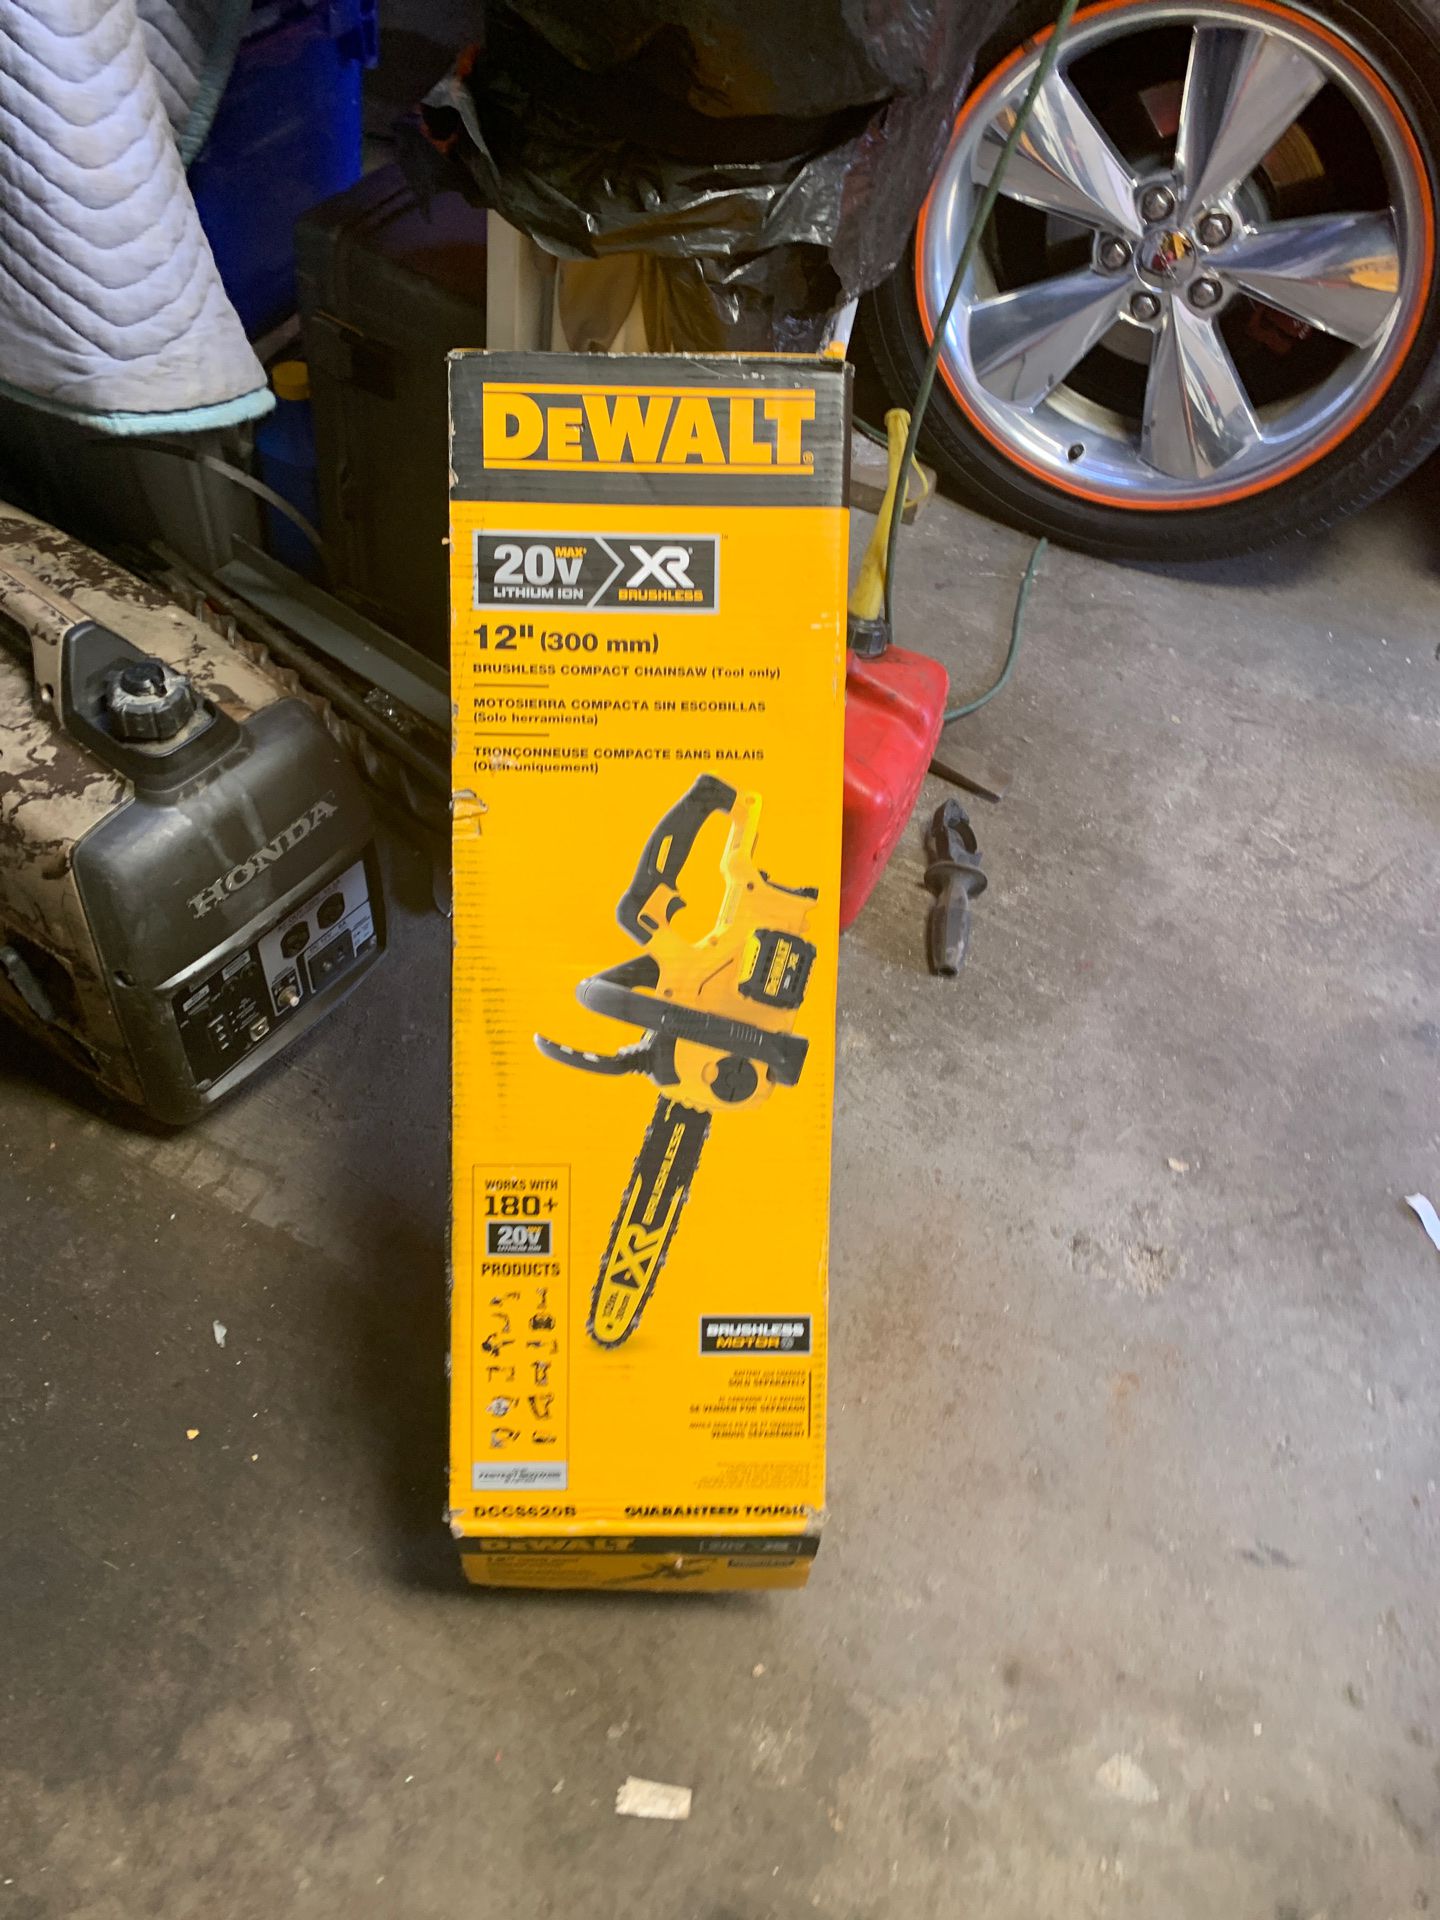 Dewalt chainsaw 20 volts bruslessnew